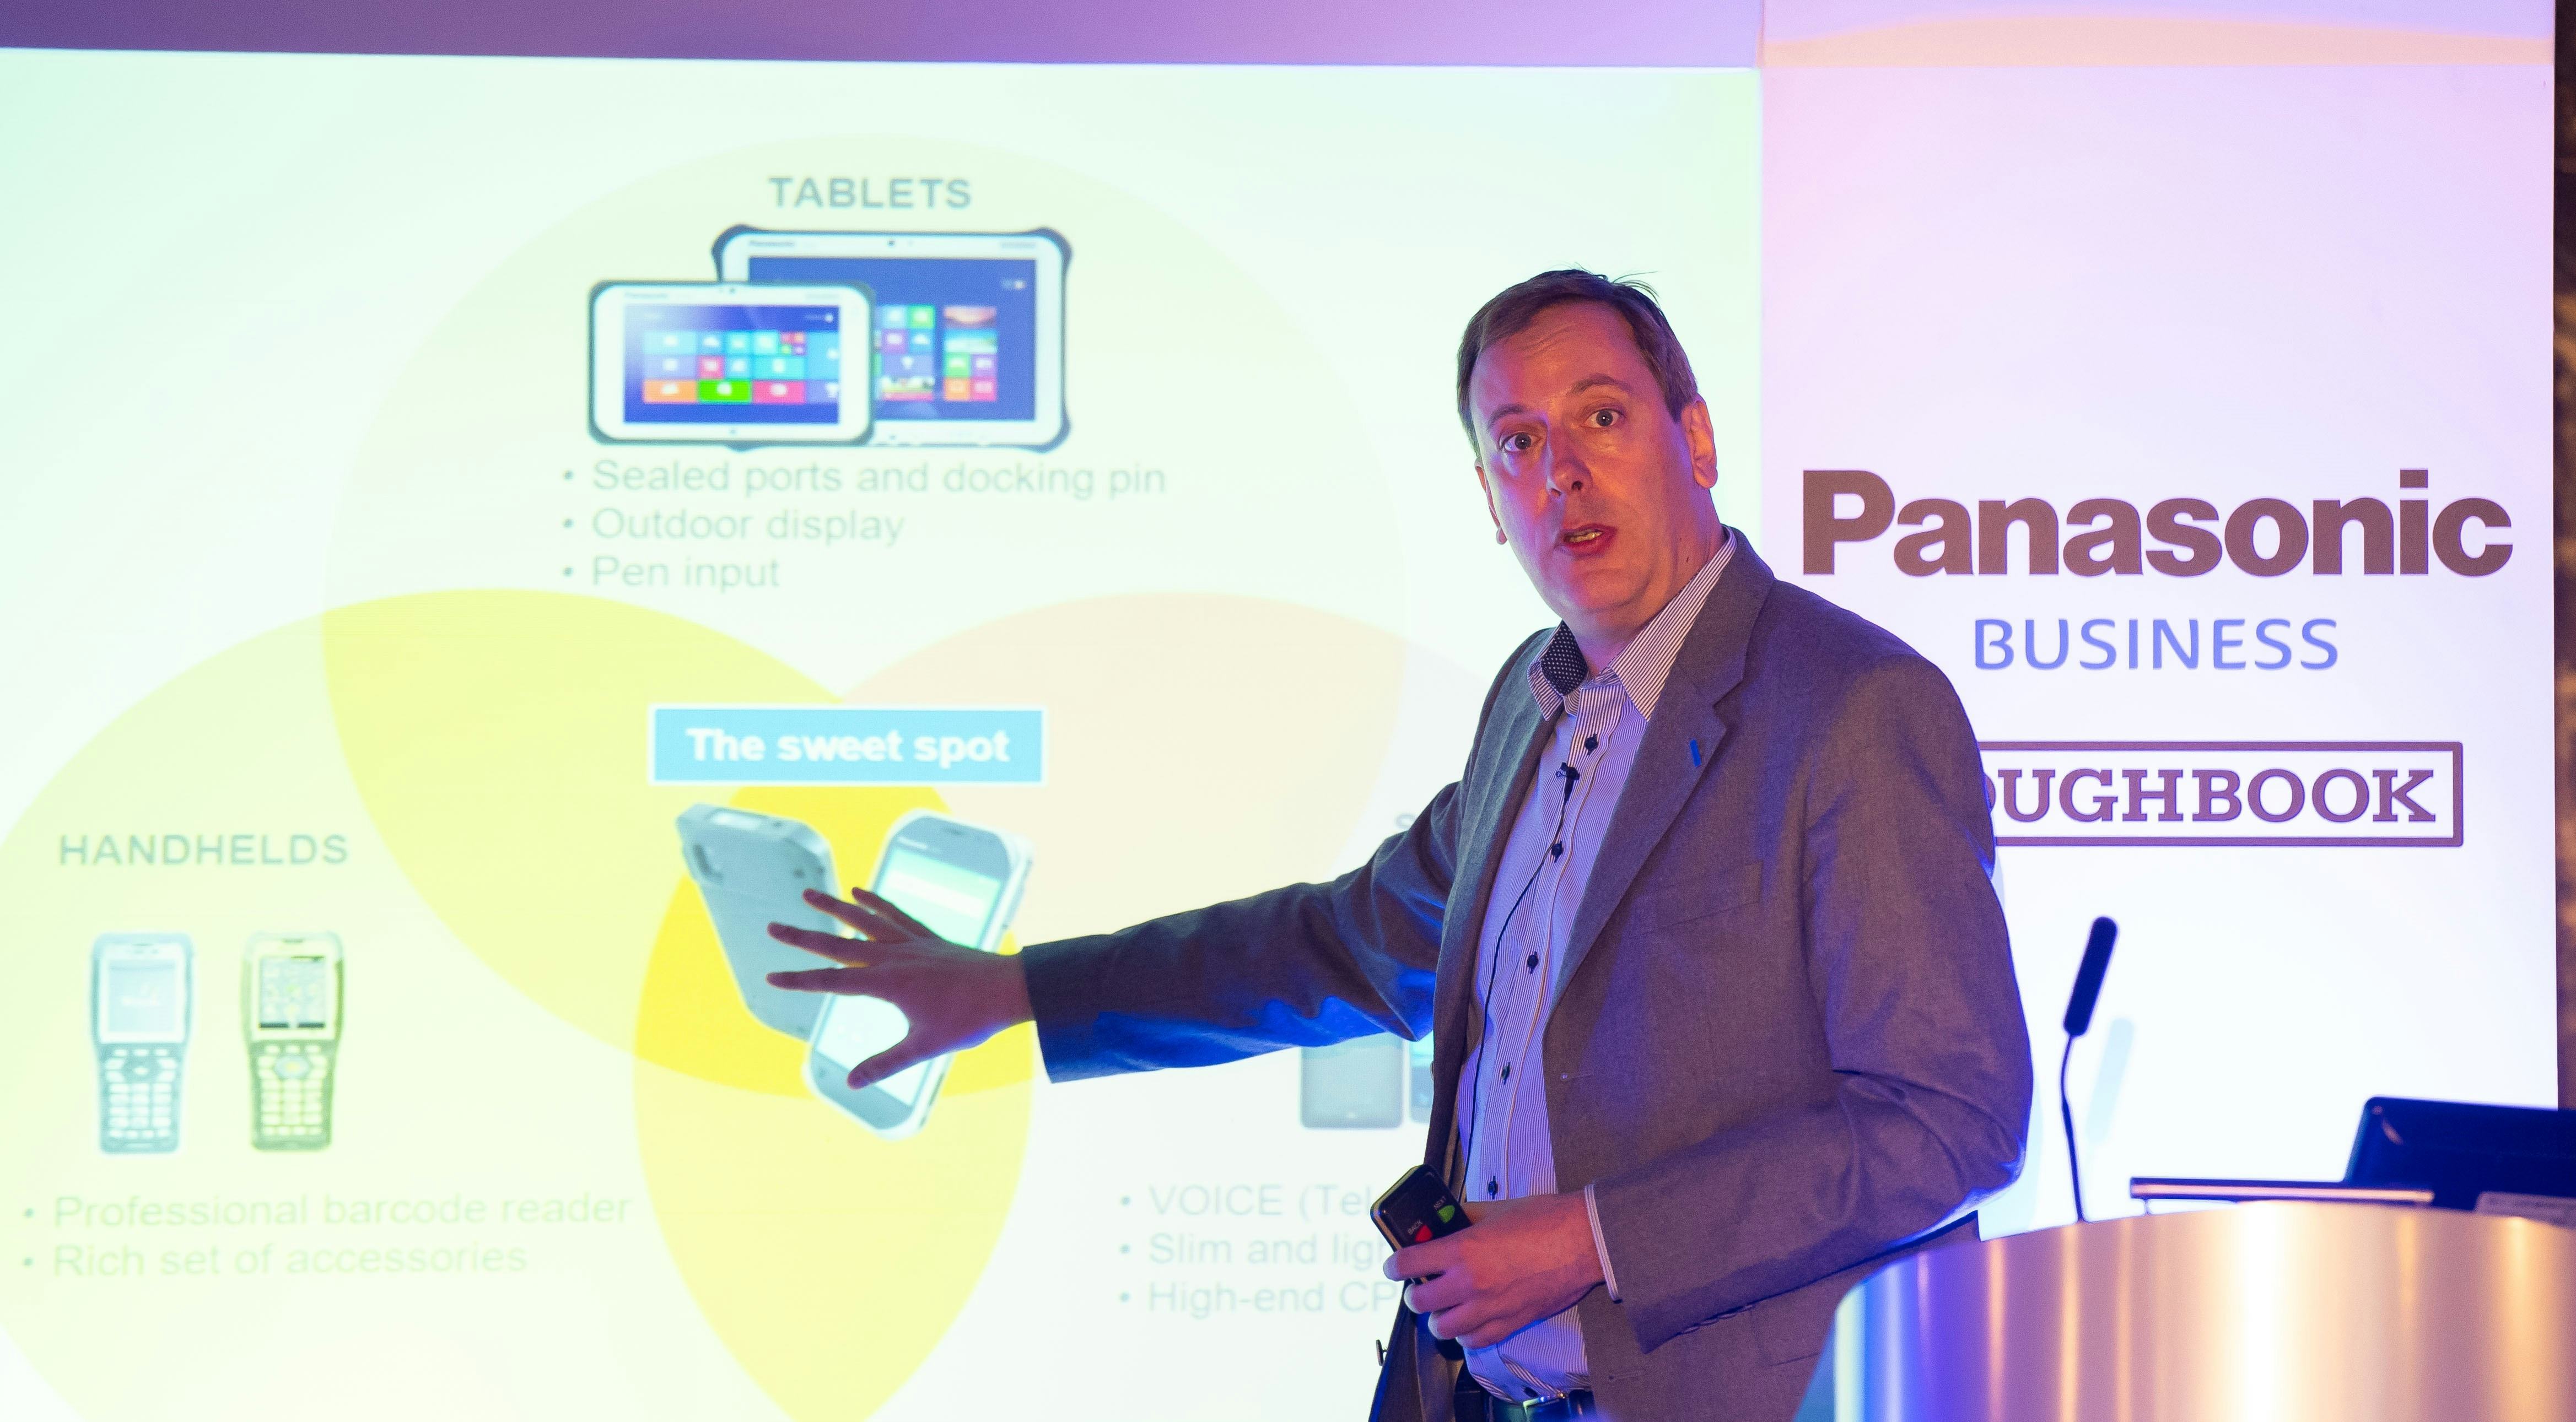 Marketing manager Jan Kämpfer legt uit waarom de FZ-T1 de 'sweet spot' van Panasonic invult